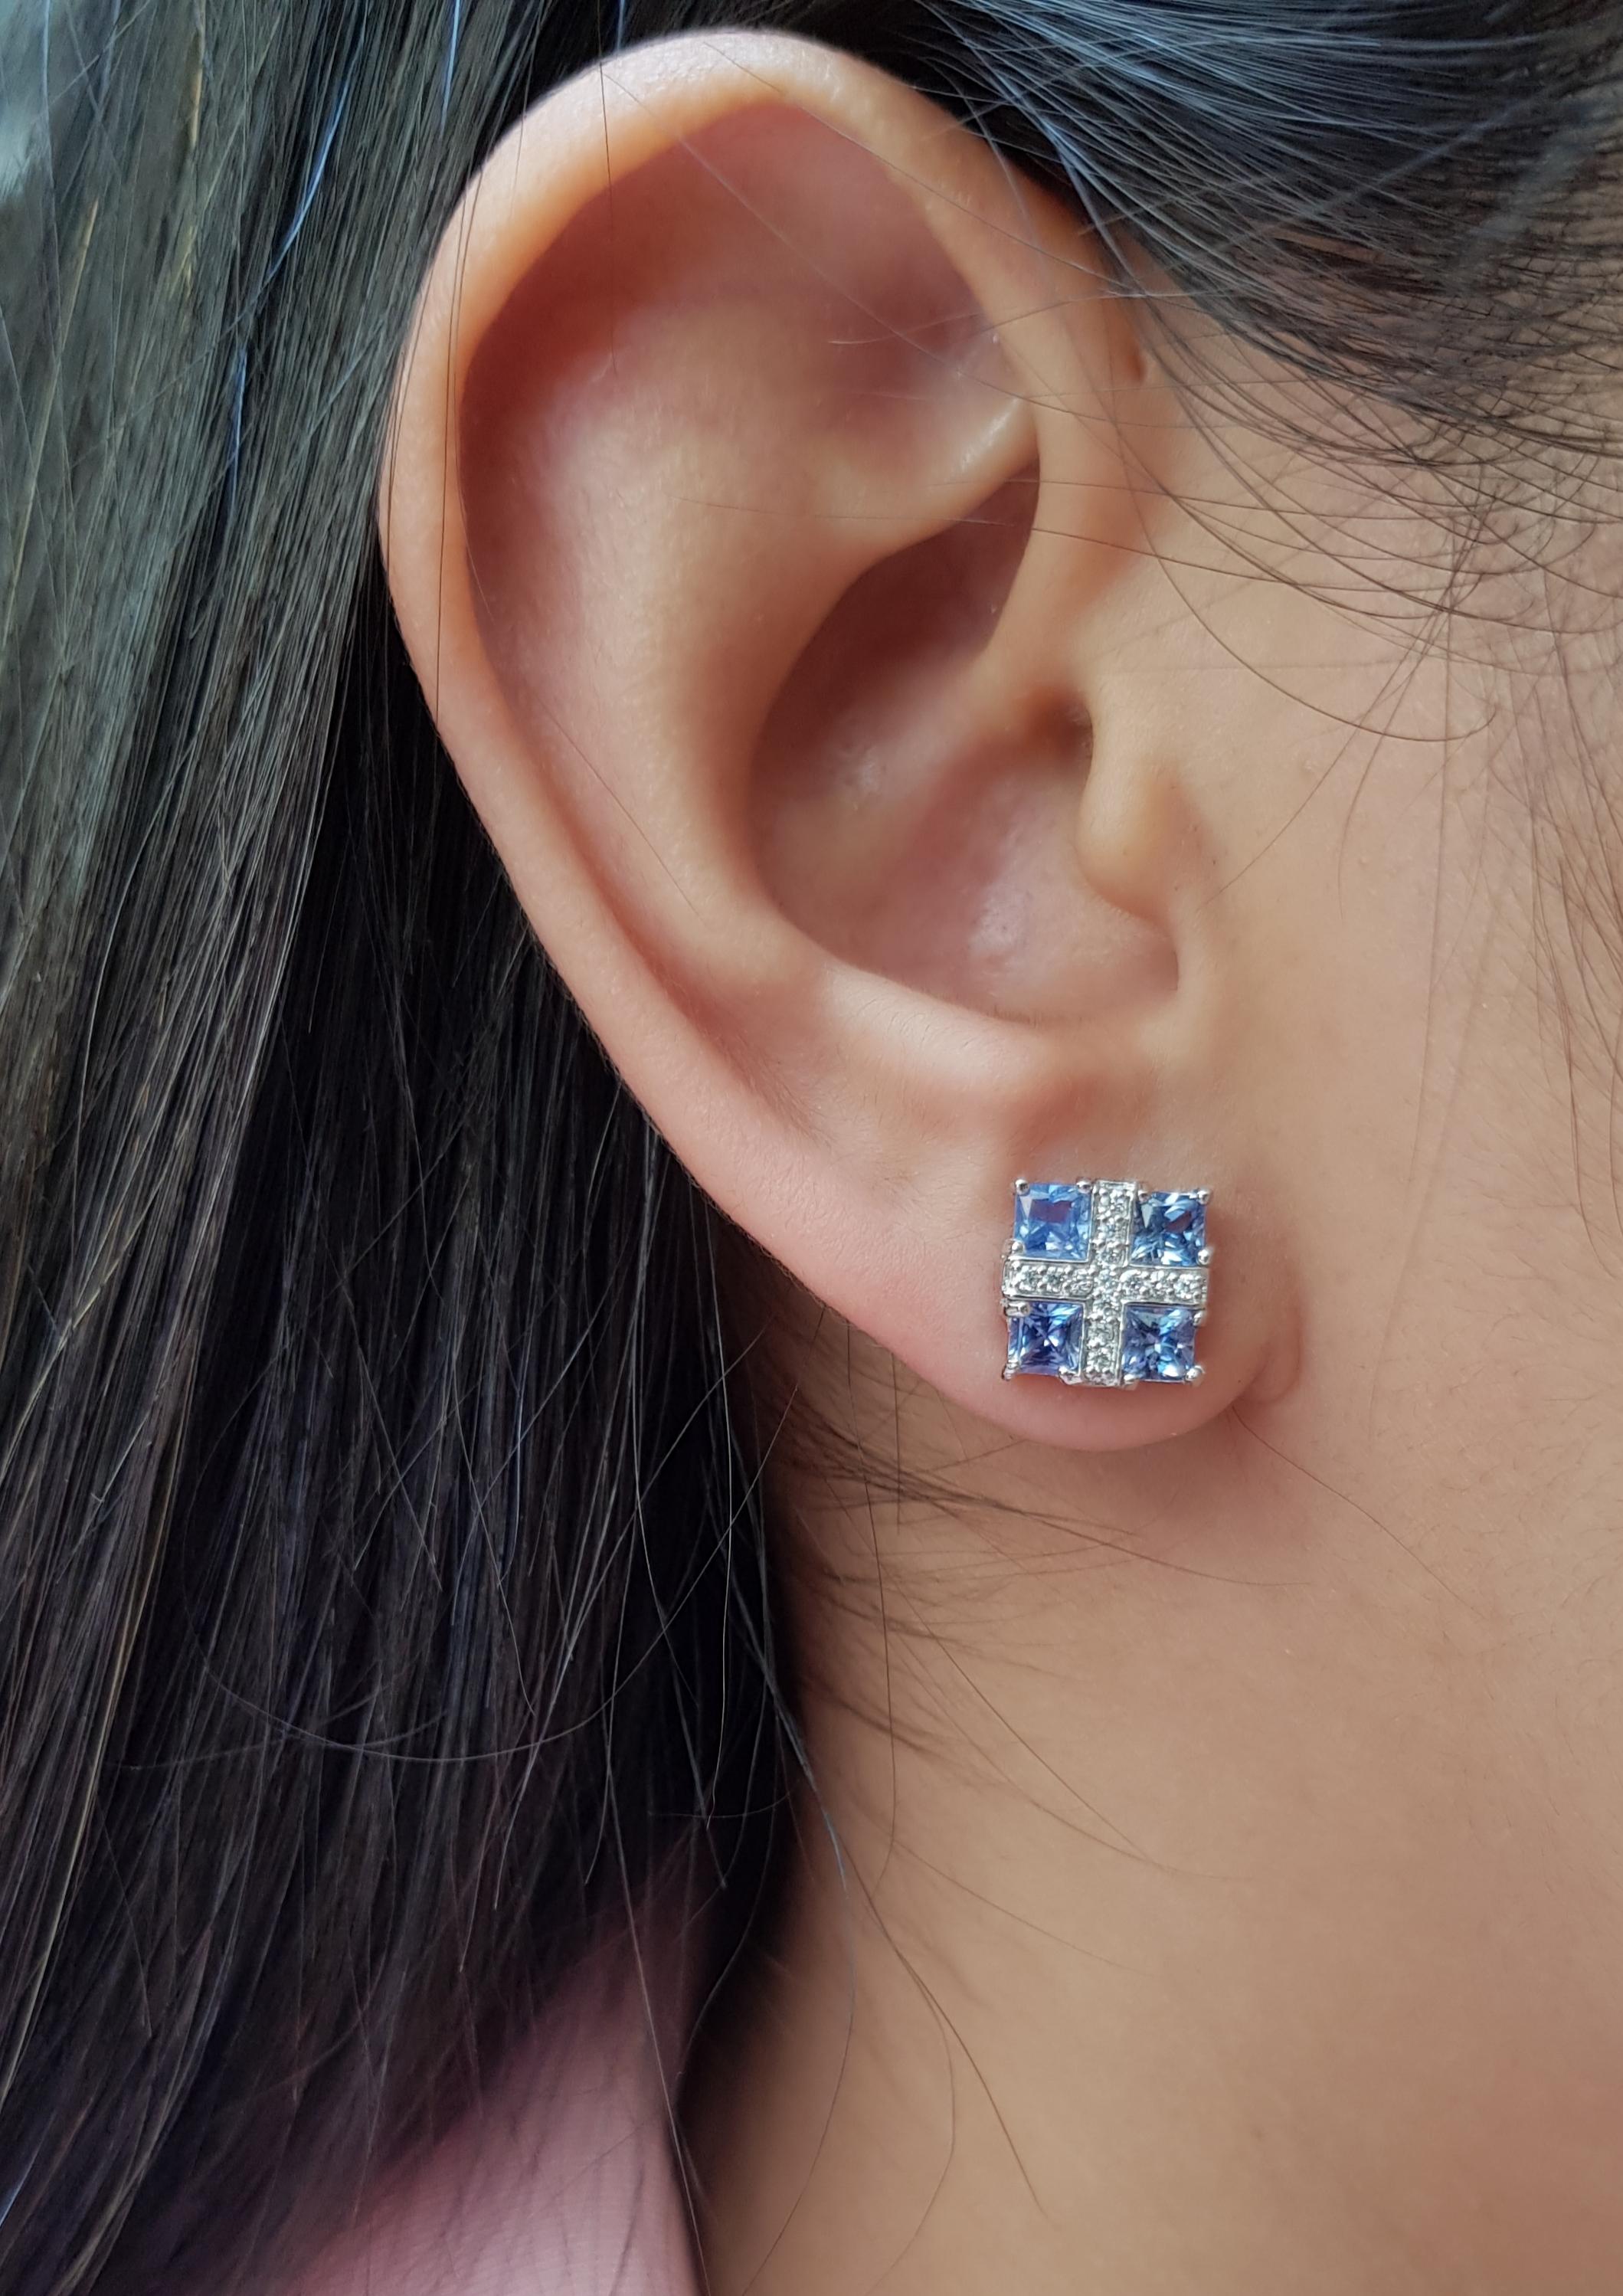 Blue Sapphire 2.51 carats with Diamond 0.15 carat Earrings set in 18 Karat White Gold Settings

Width: 0.9 cm
Length: 0.9 cm 

